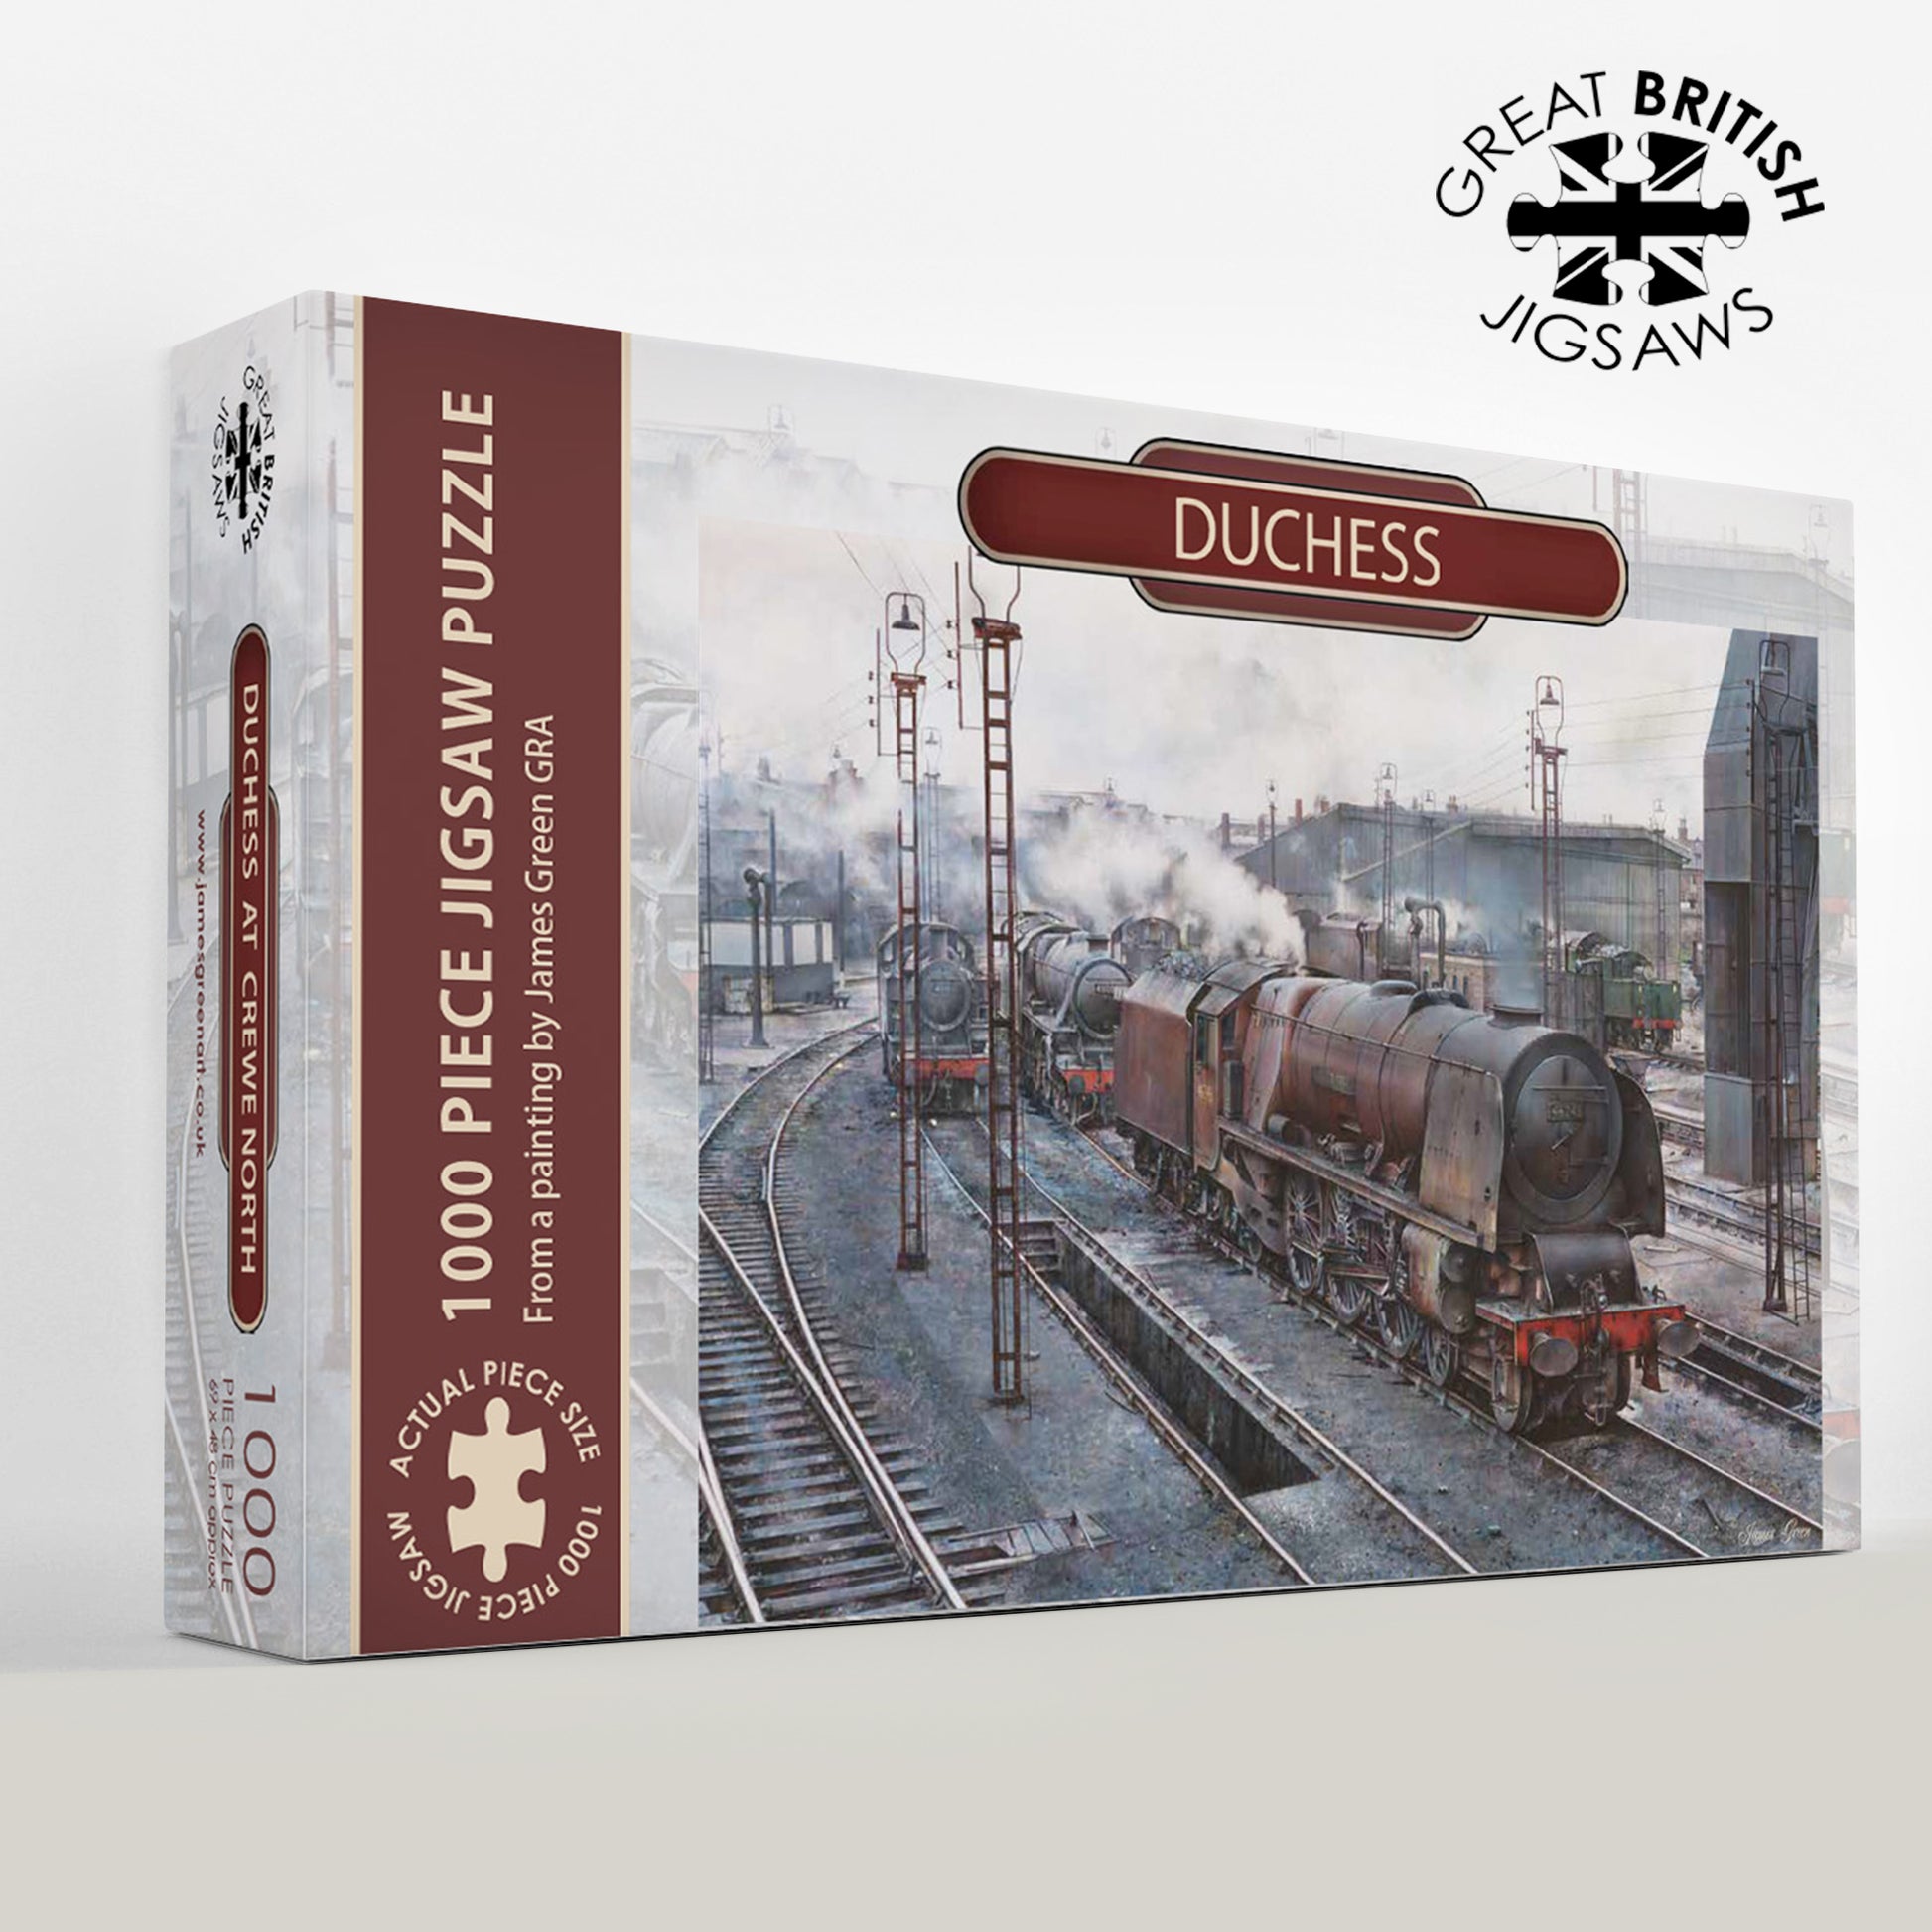 Duchess City of Leeds steam train jigsaw puzzle